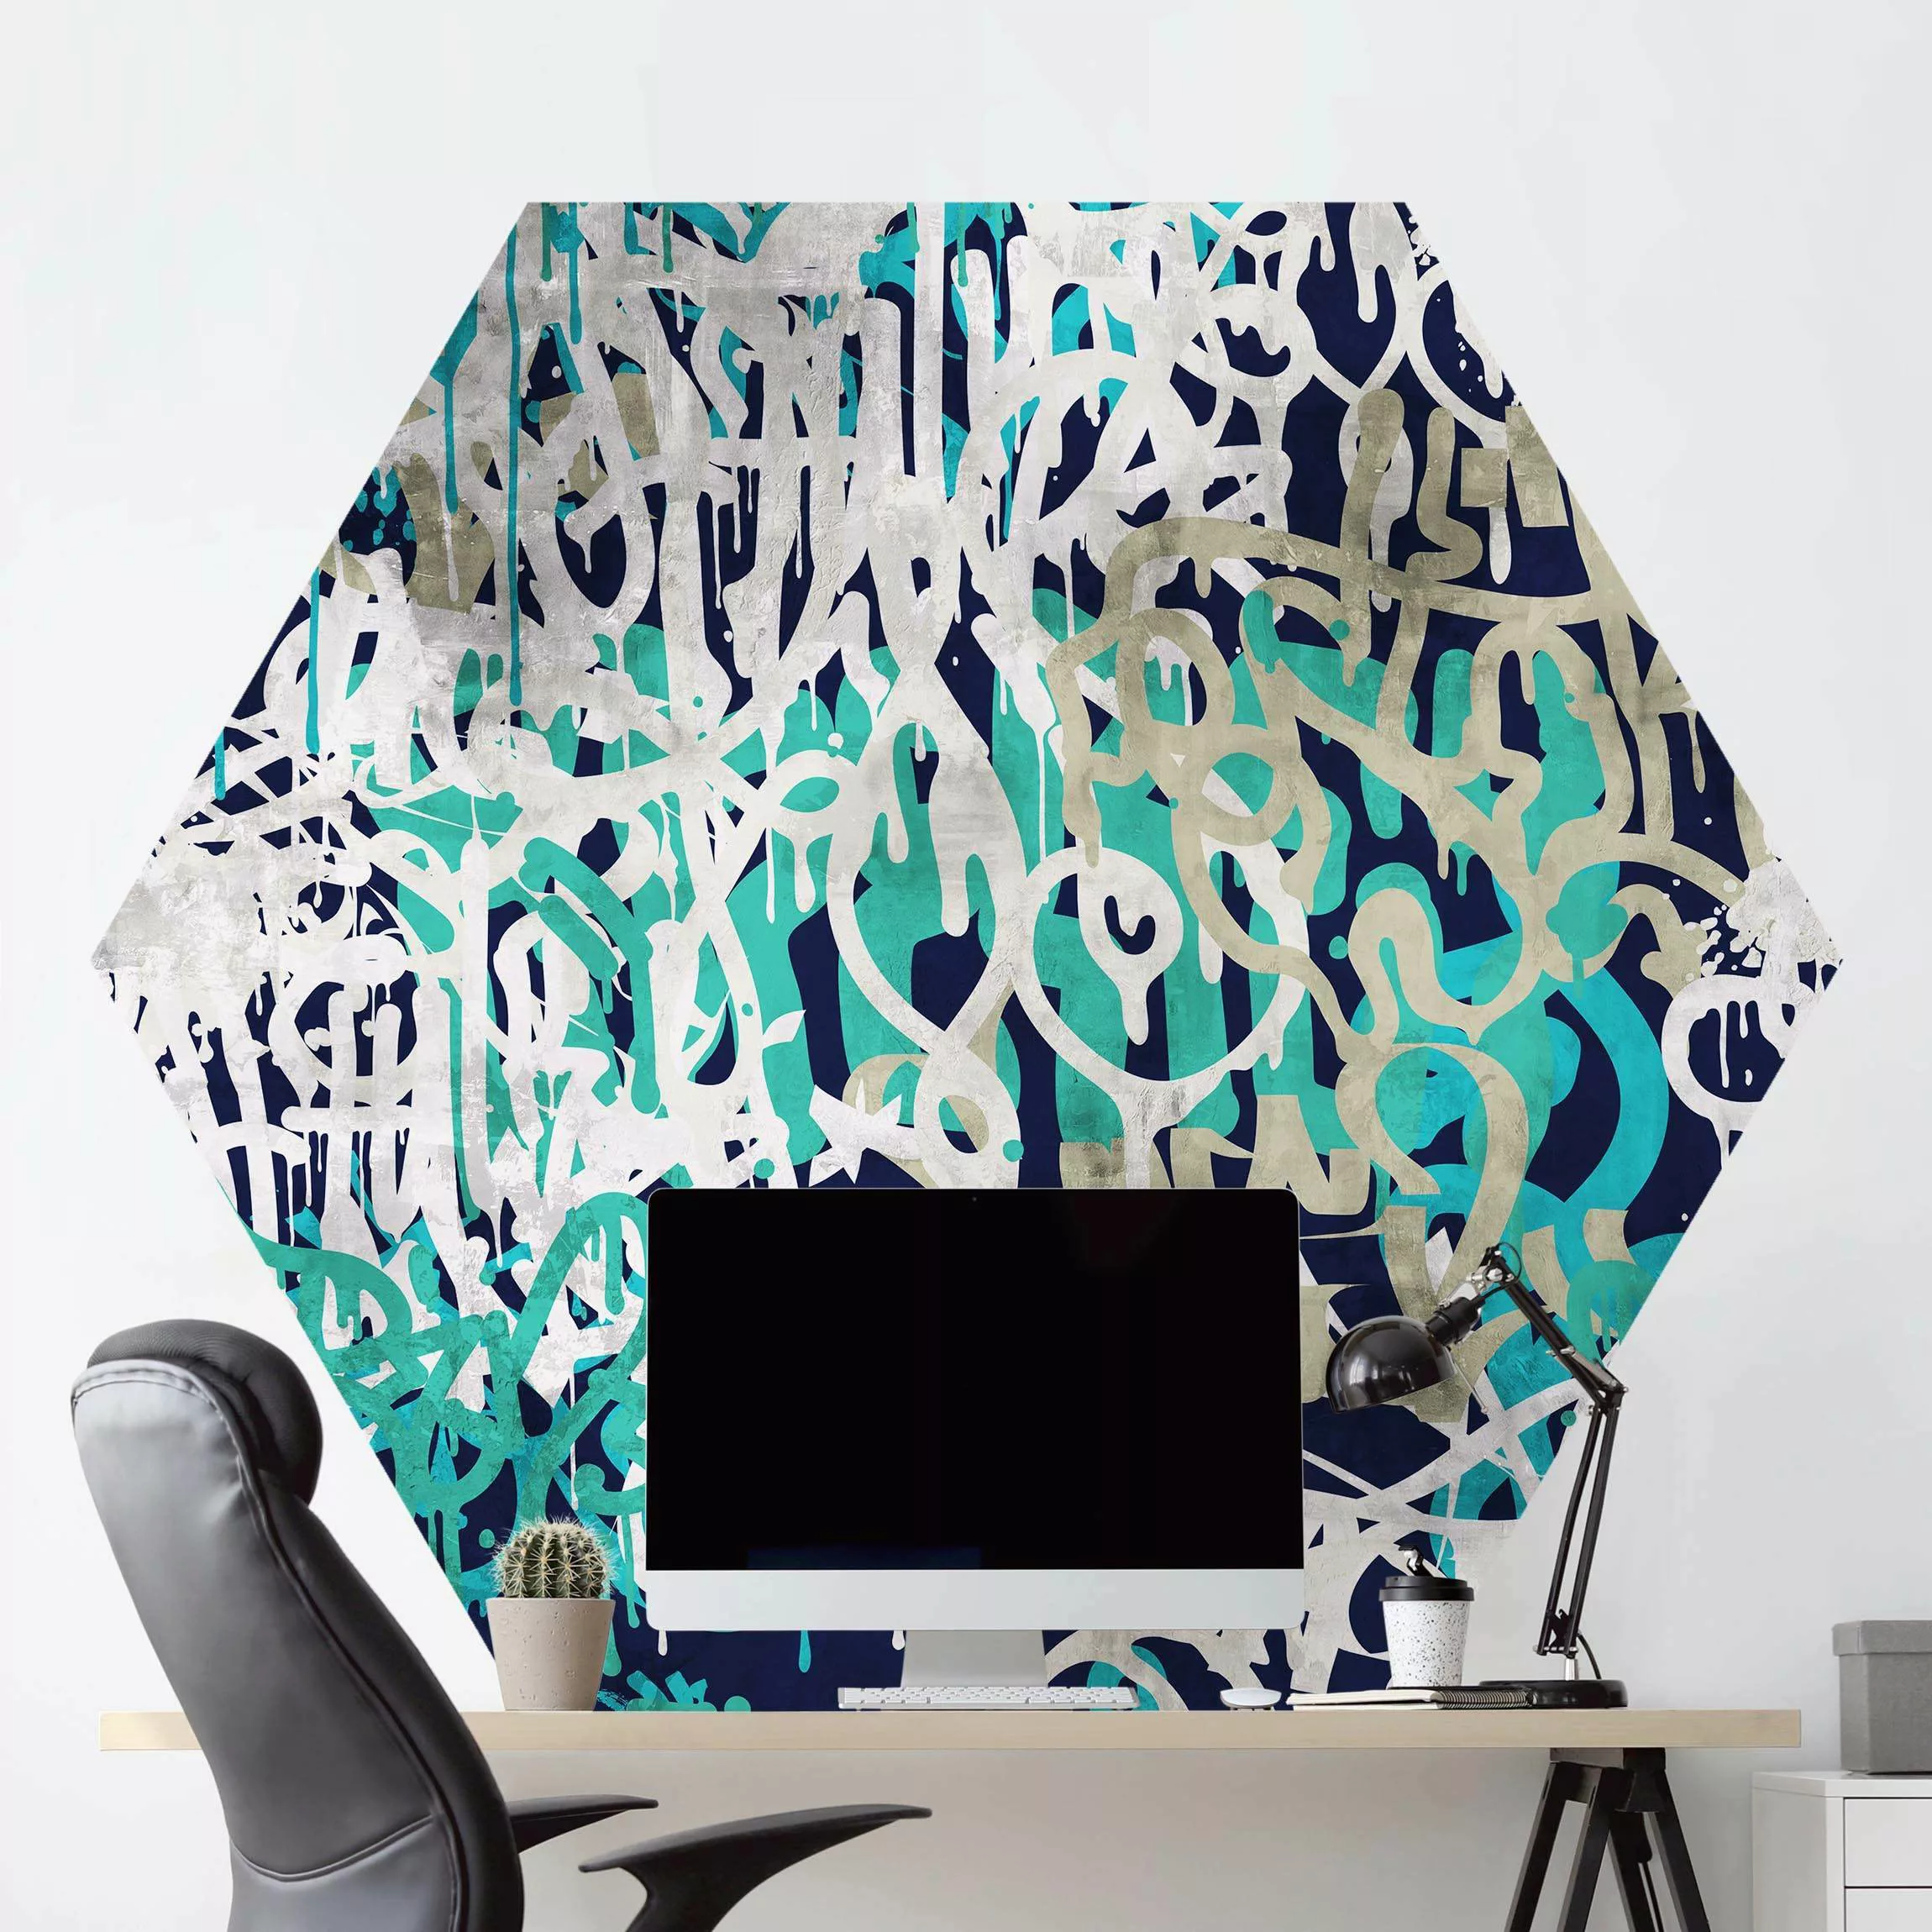 Hexagon Mustertapete selbstklebend Graffiti Art Tagged Wall Türkis günstig online kaufen